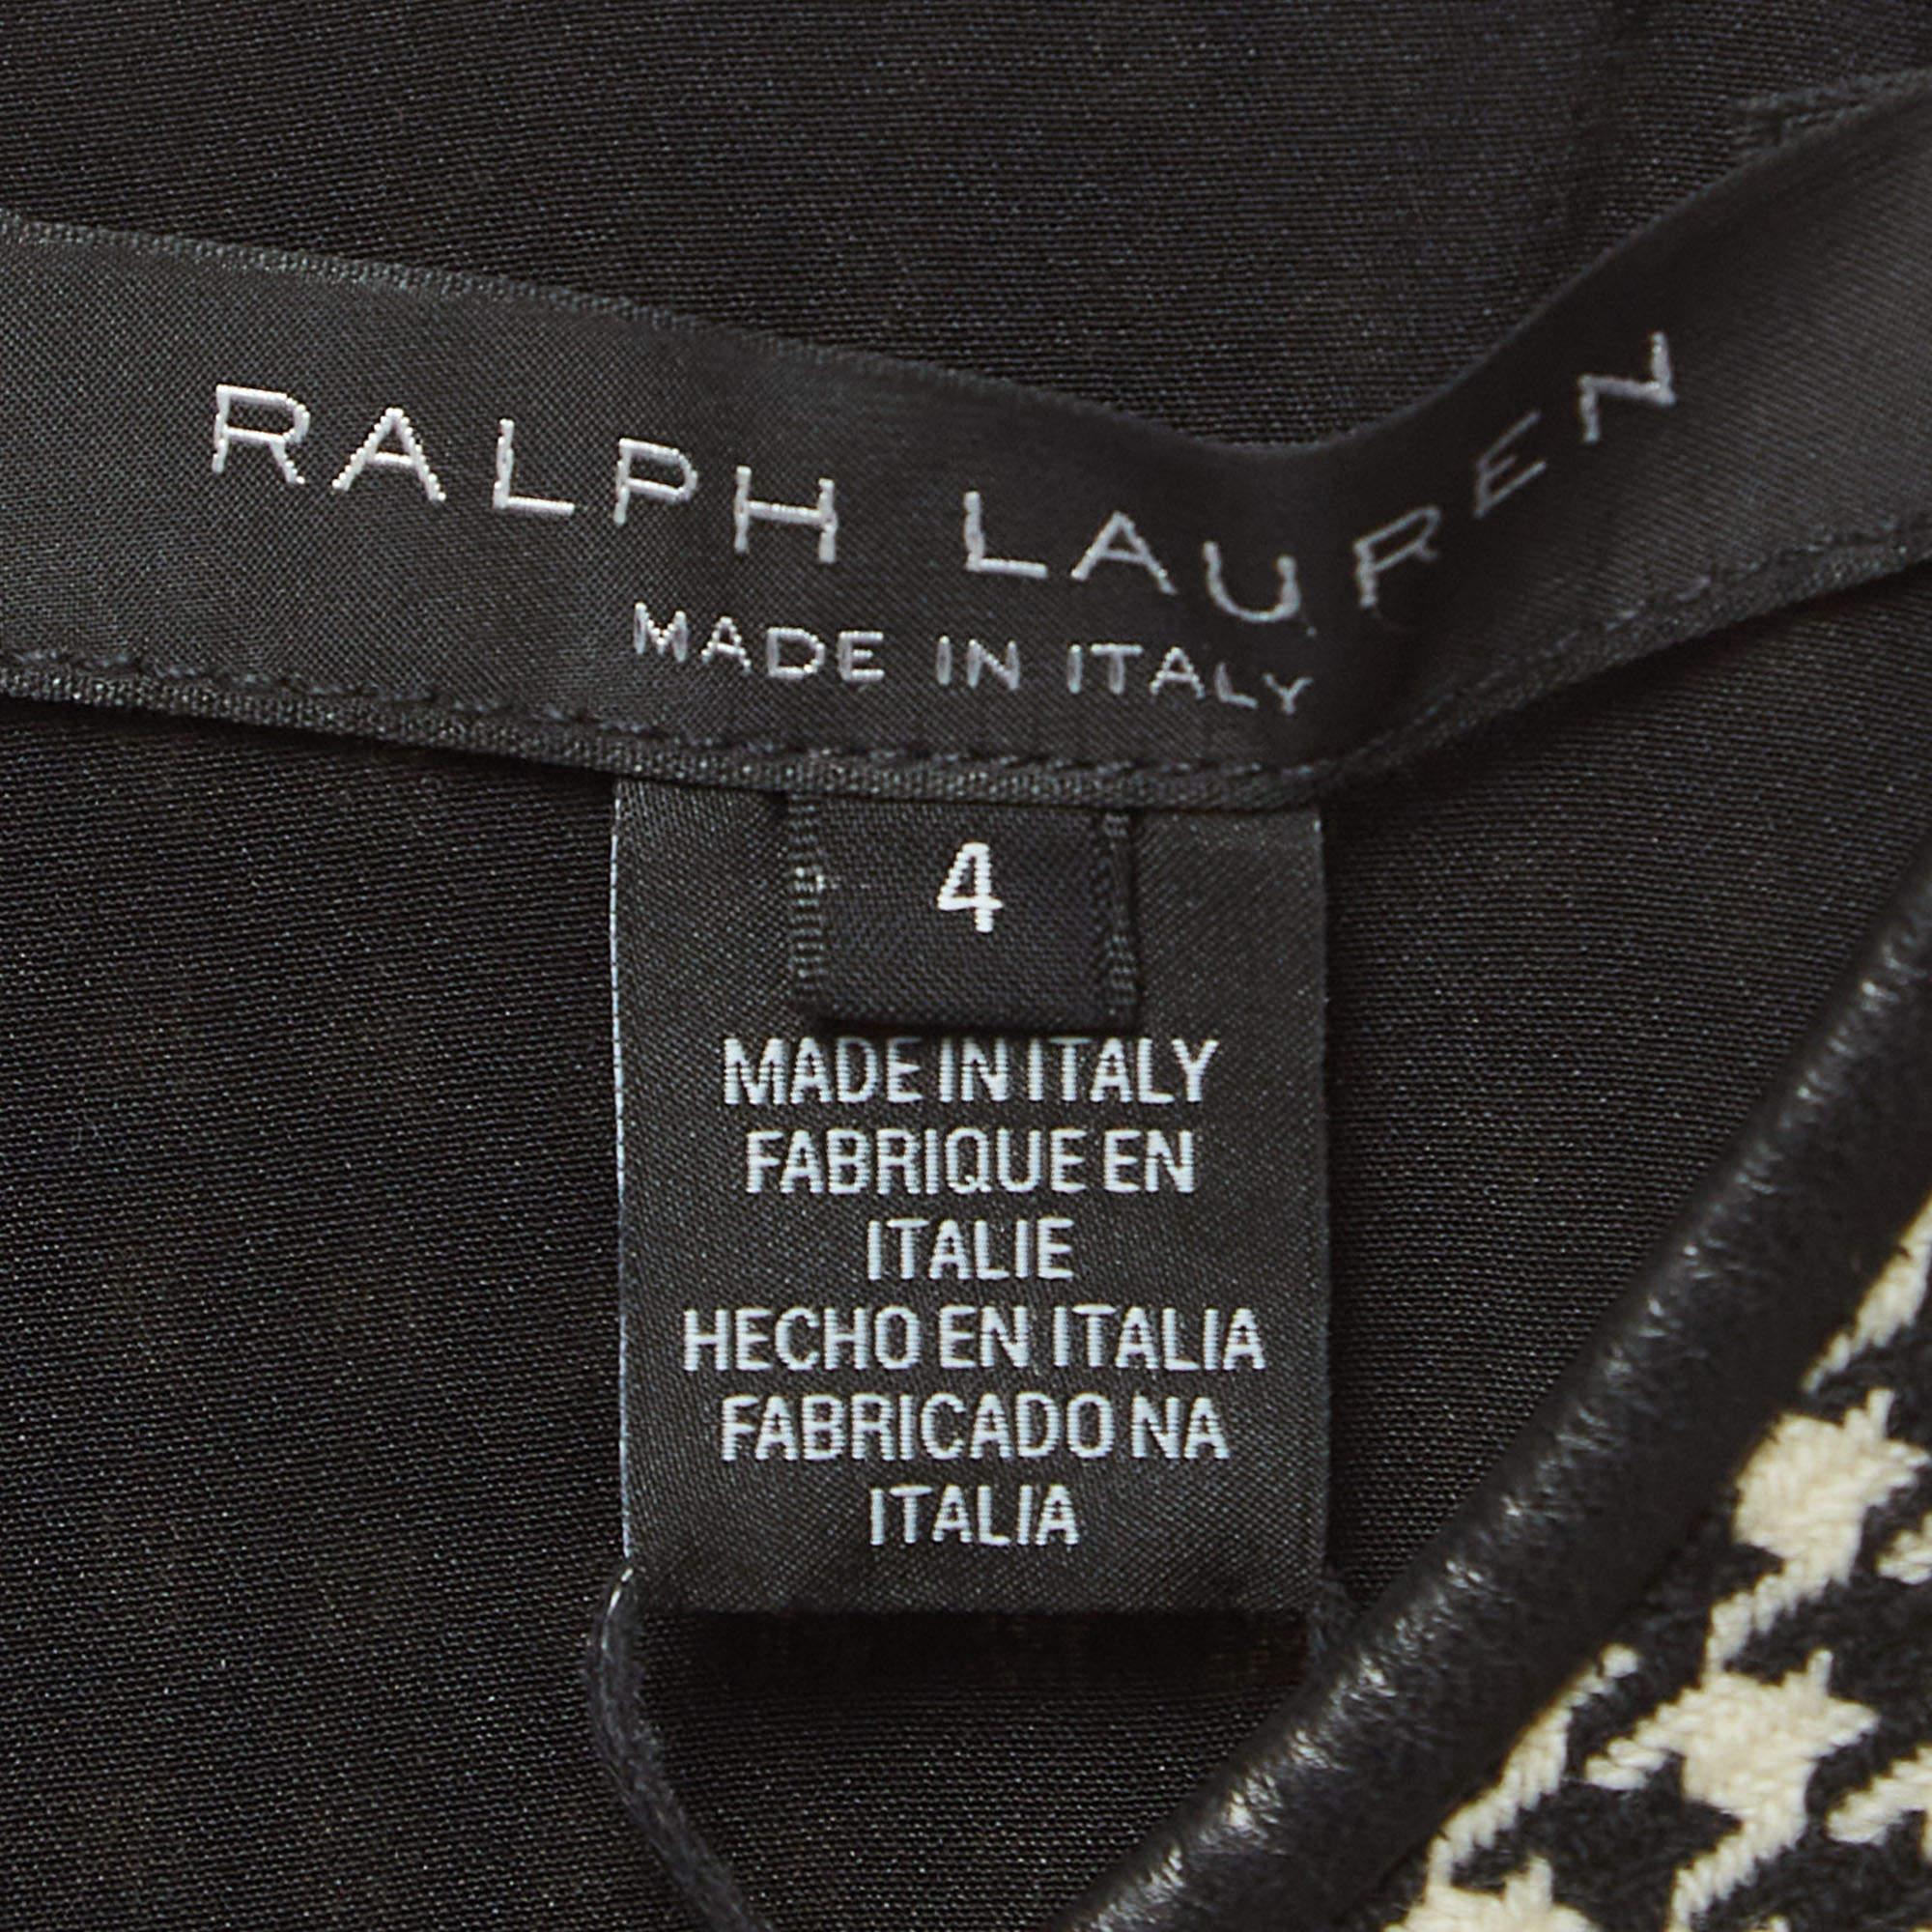  Ralph Lauren Black/White Houndstooth Patterned Wool Short Dress S Pour femmes 